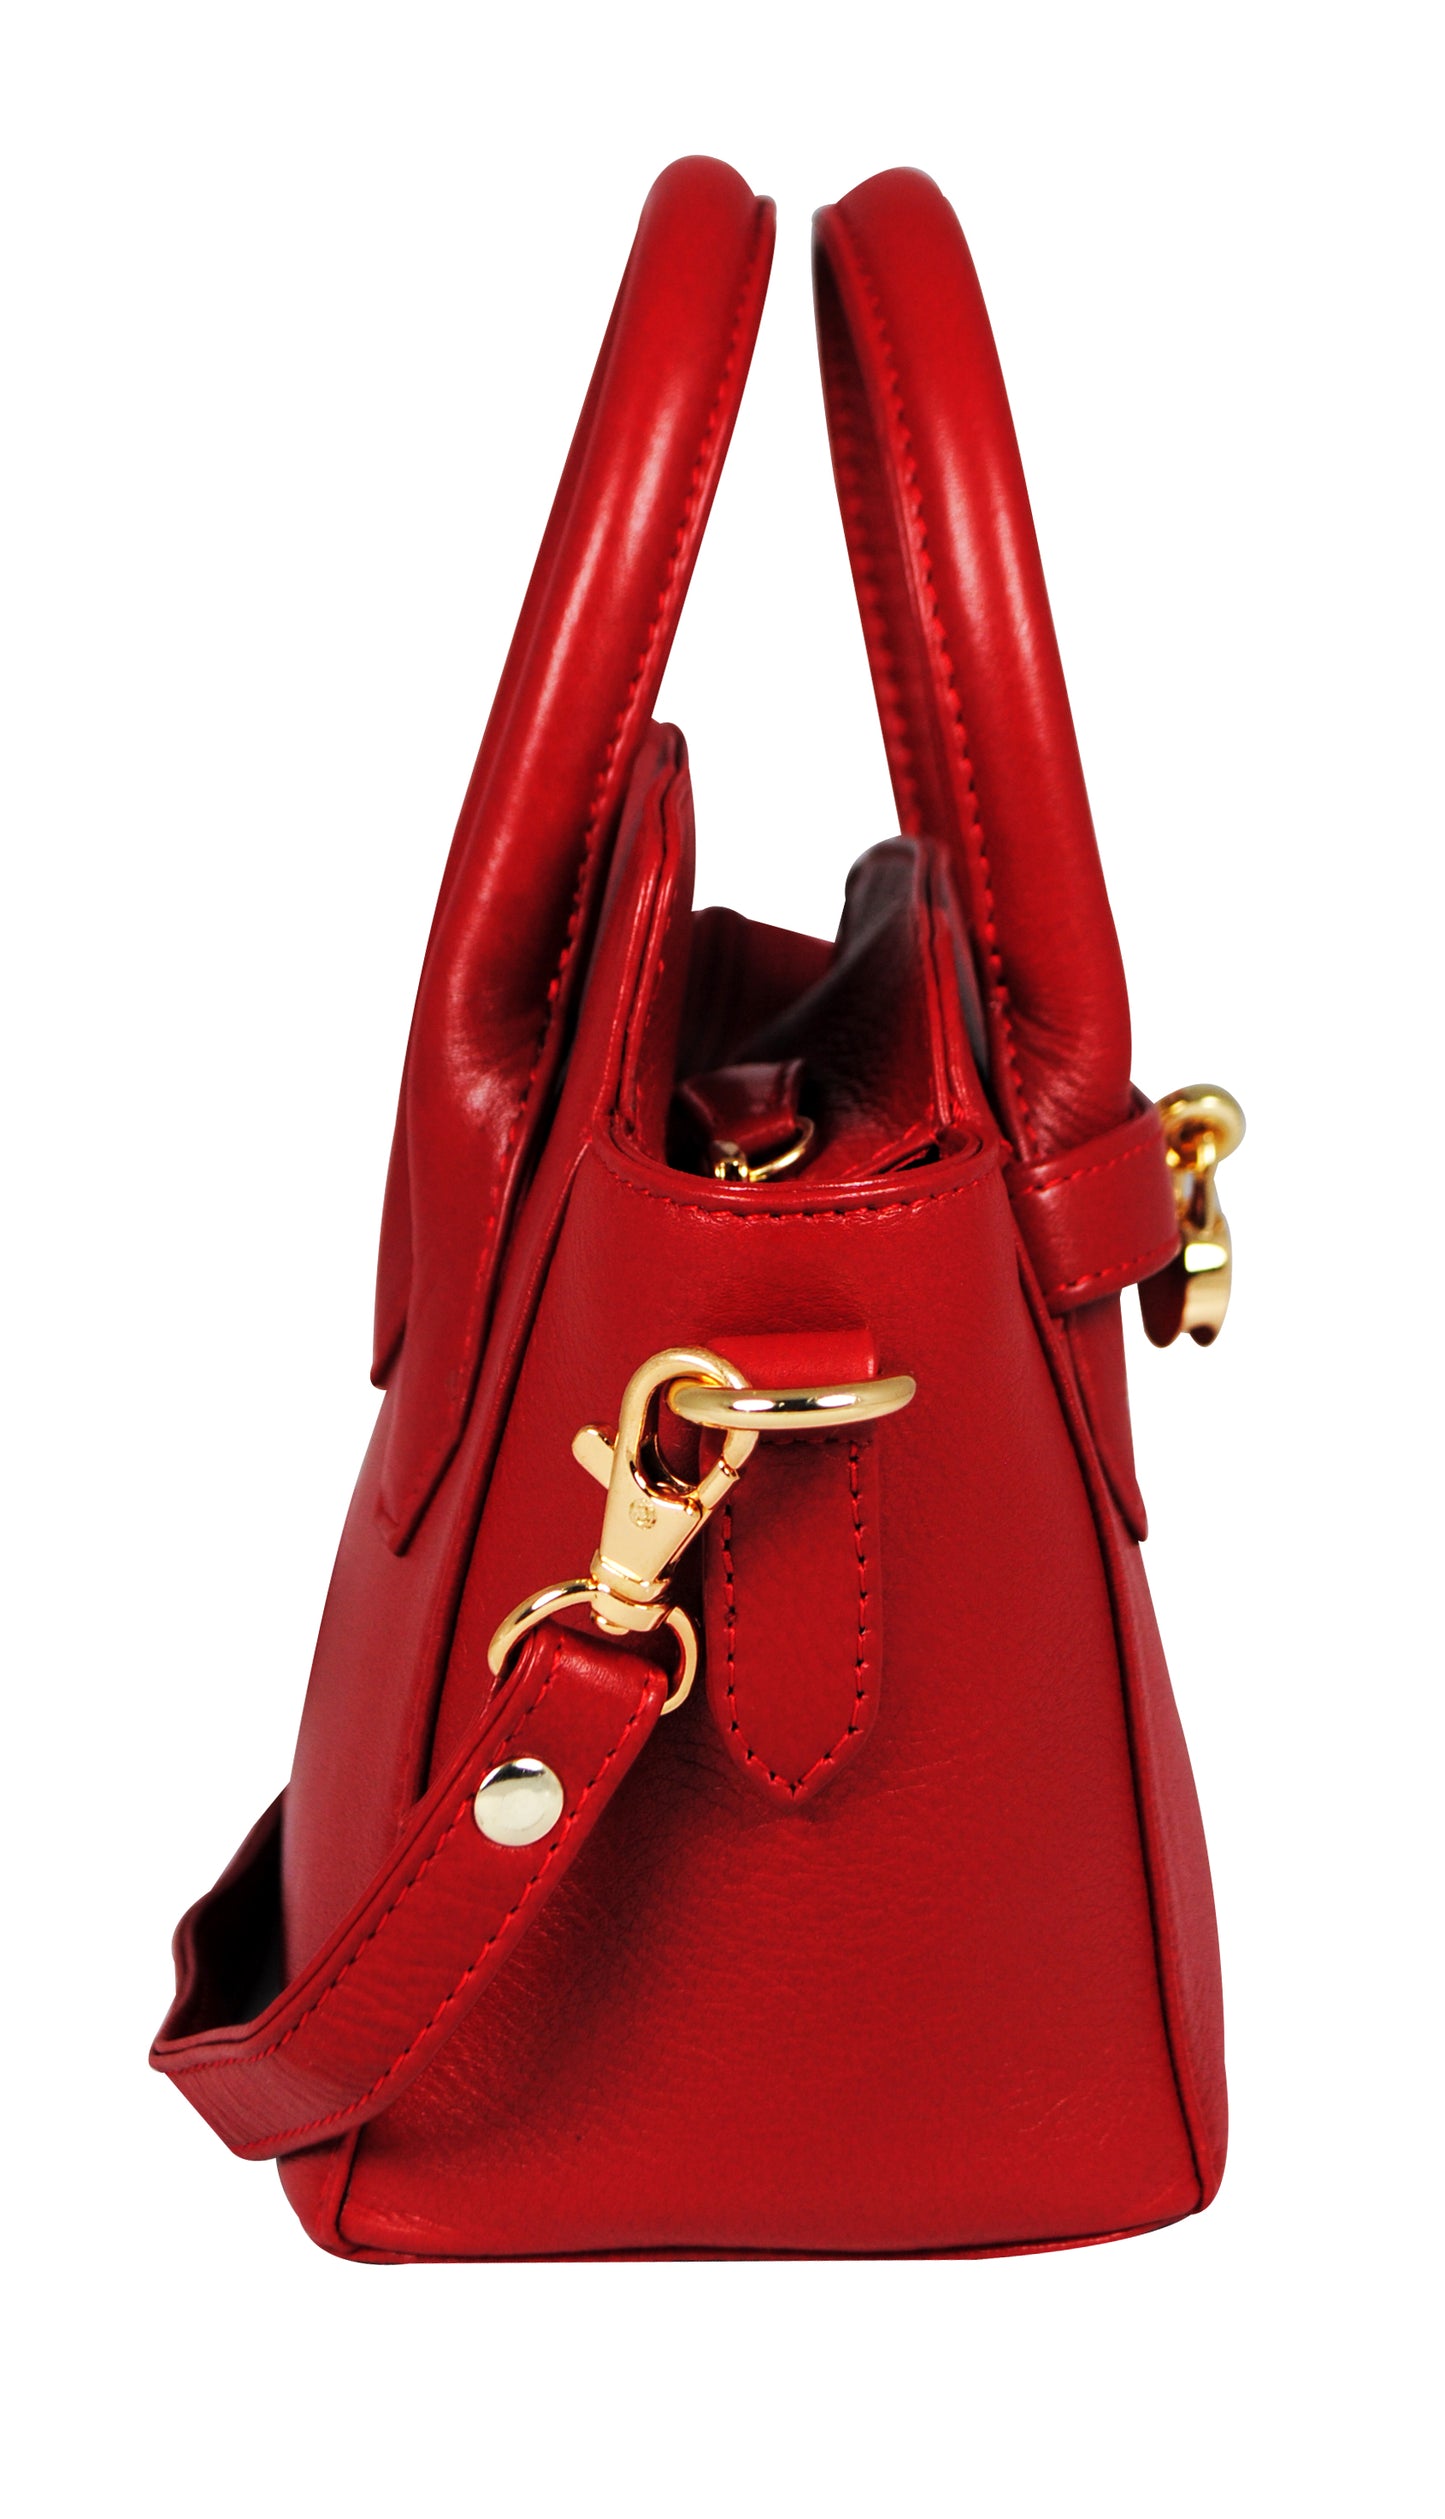 Calfnero Women's Genuine Leather Hand Bag (71330-Red)